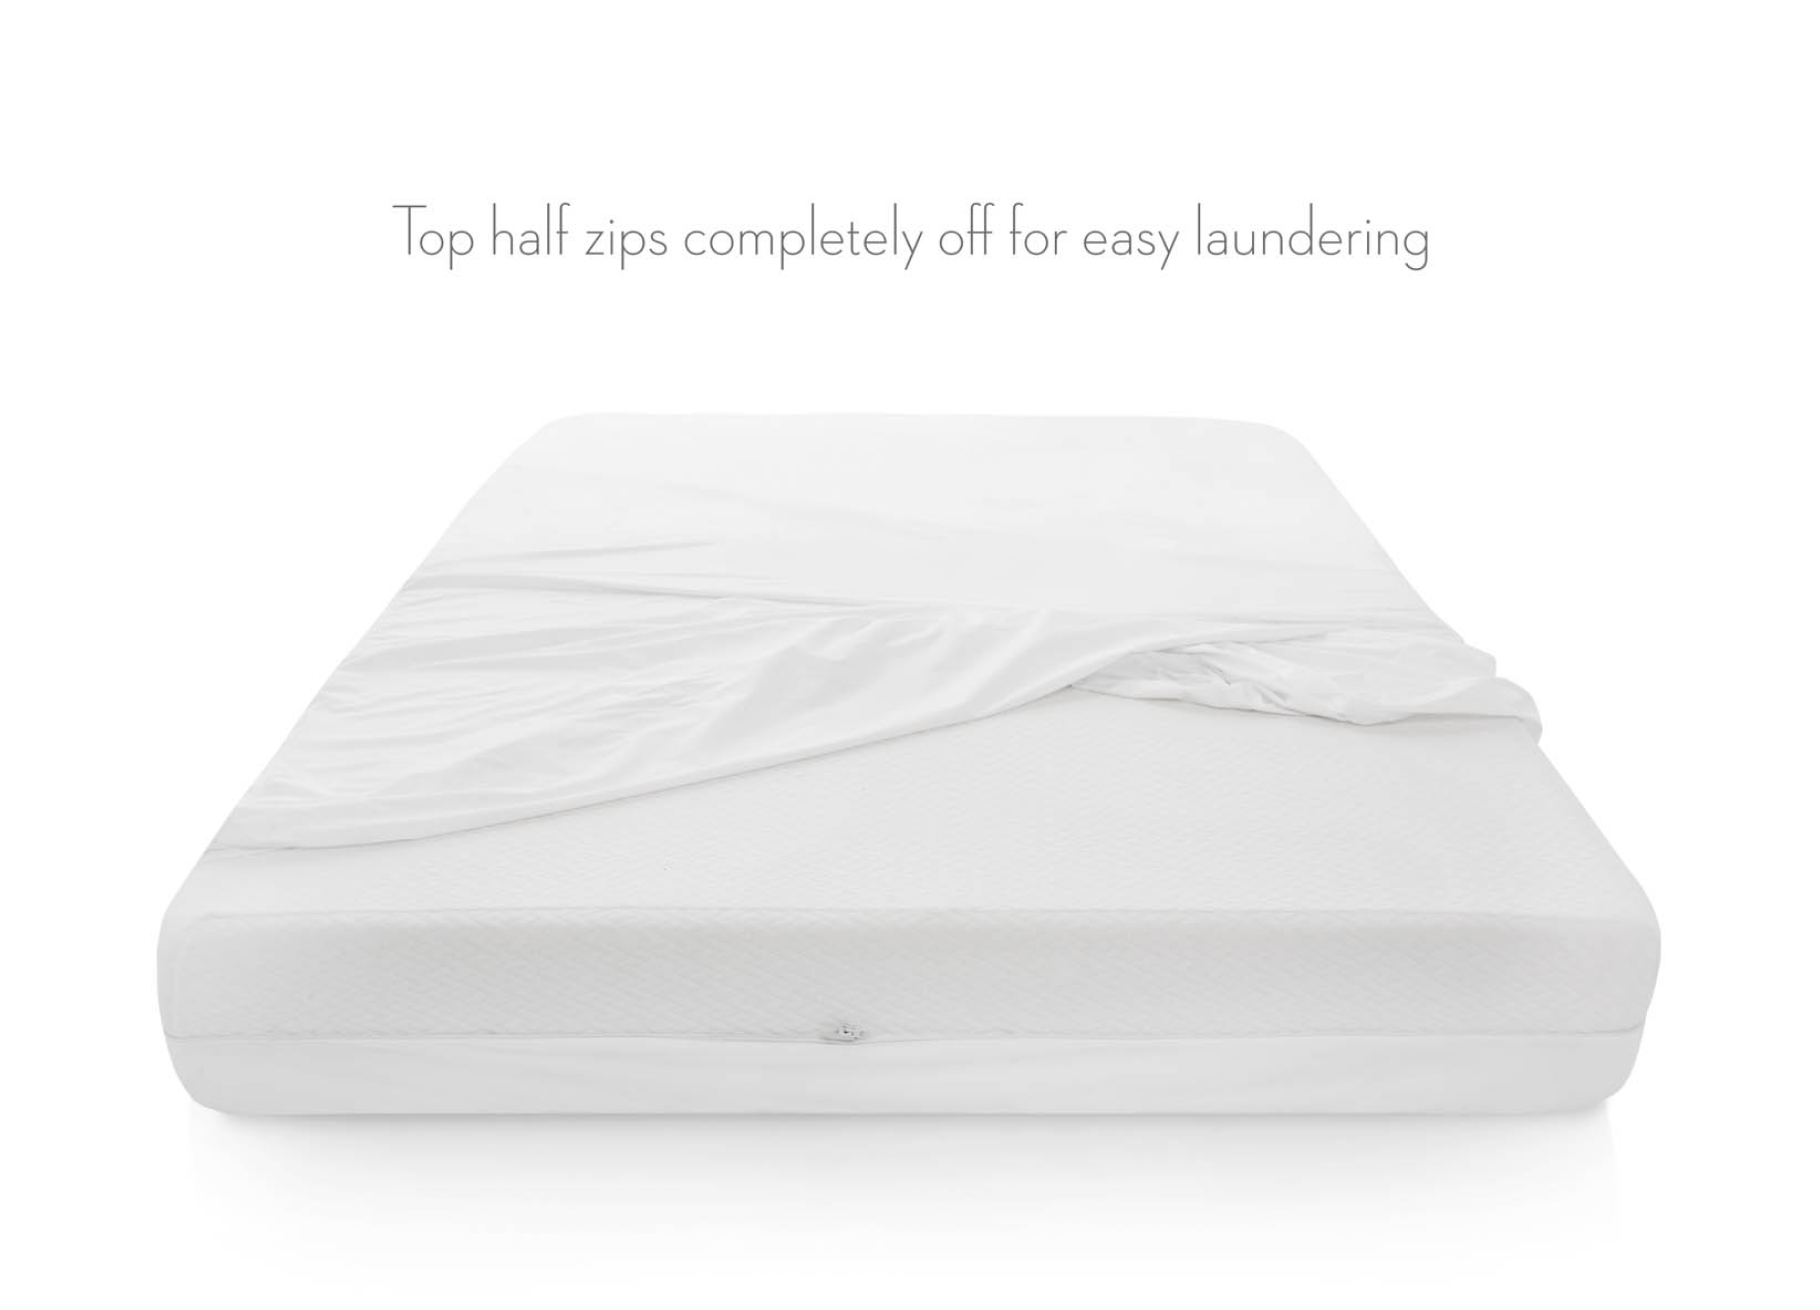 Encase HD mattress protector being unzipped for washing - Mattress King